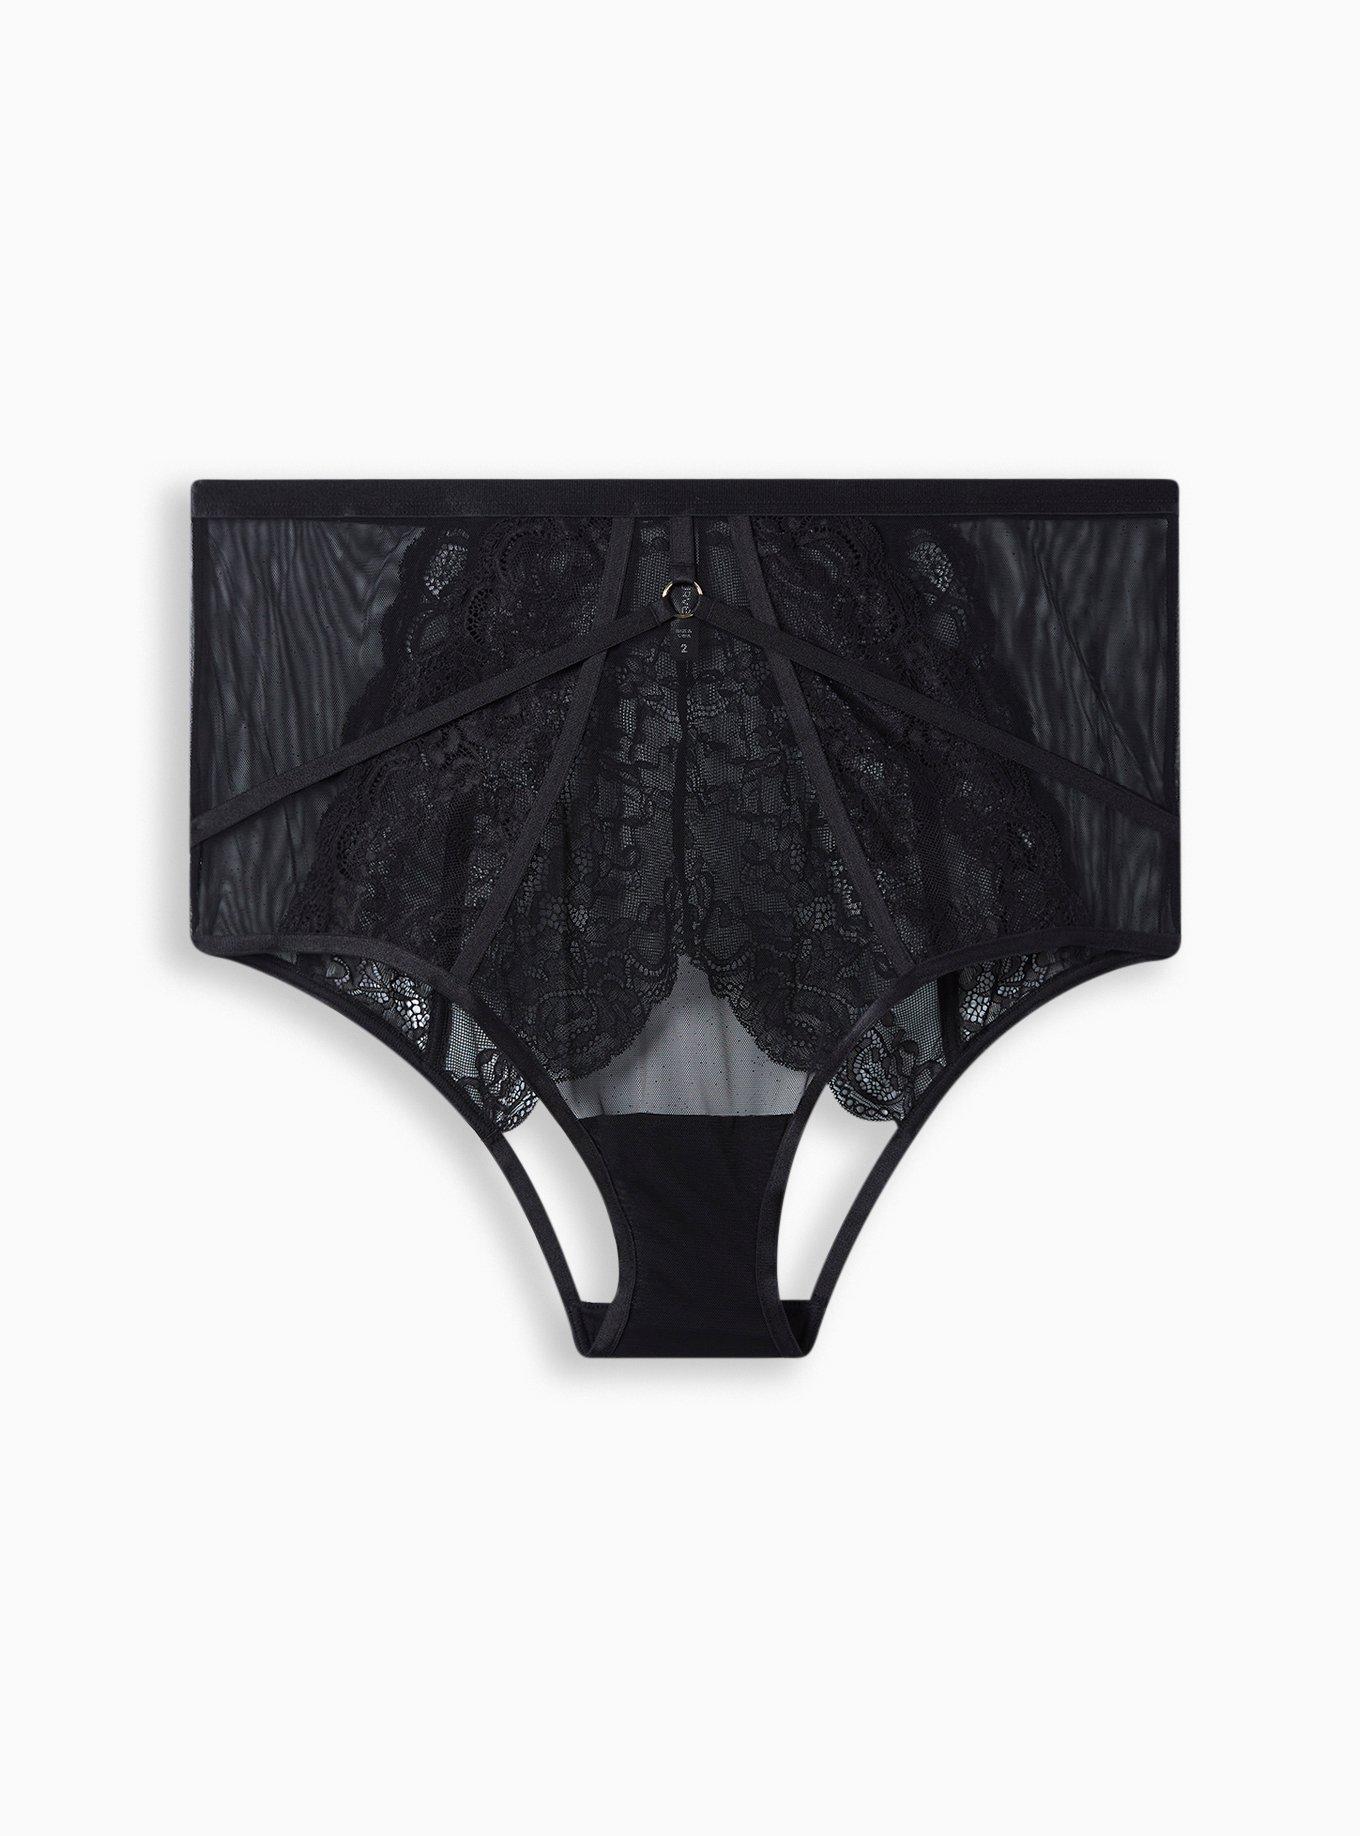 Black Friday Shopping Team - Shop Til You Drop Womens Thong Underwear